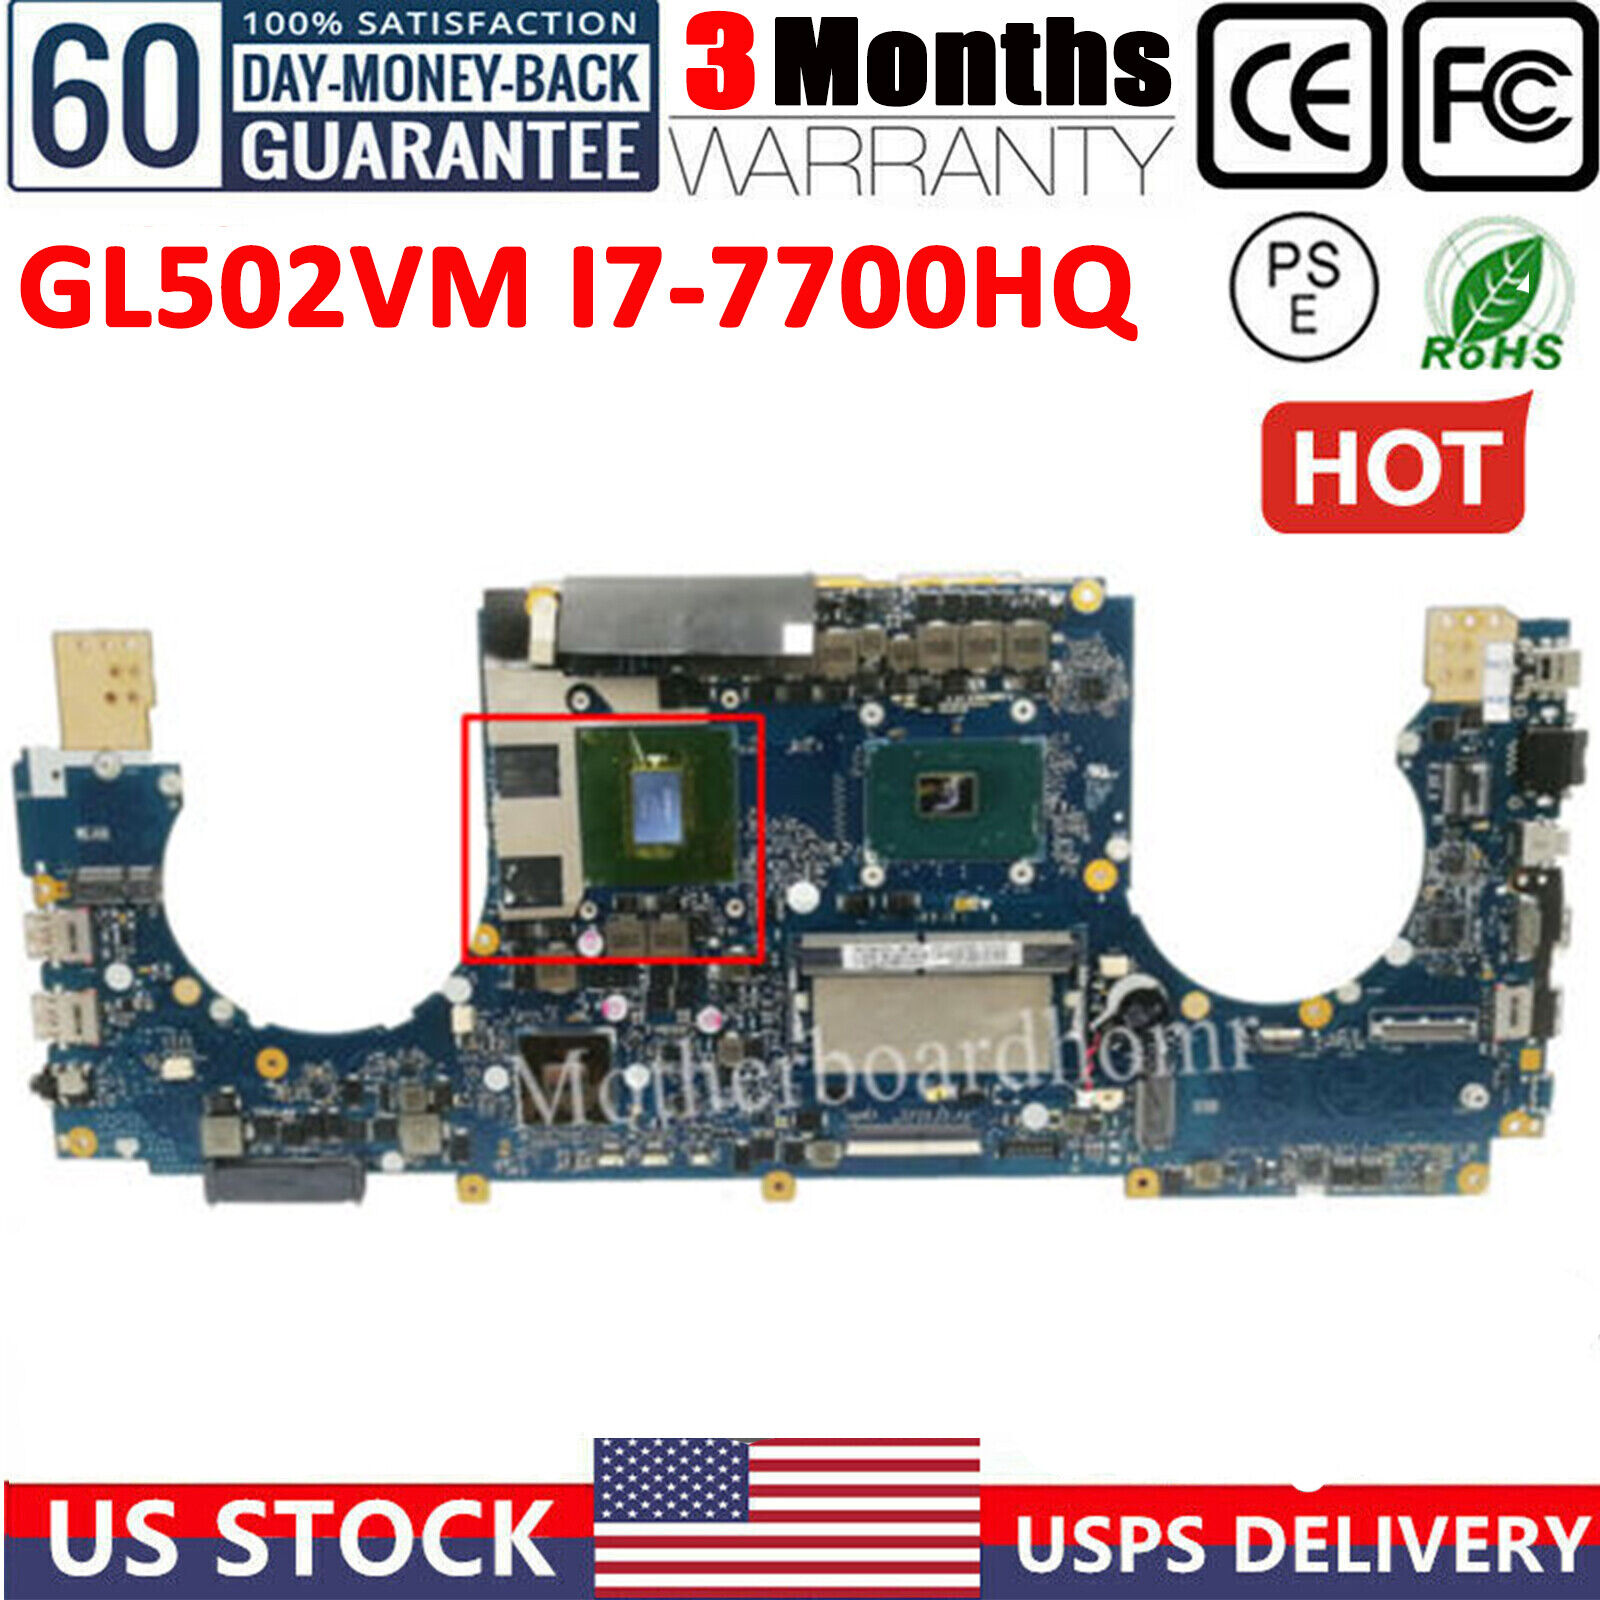 GL502VM MOTHERBOARD FOR ASUS ROG CORE I7-7700HQ 8GB GTX1060 60NB0DR0-MB7000